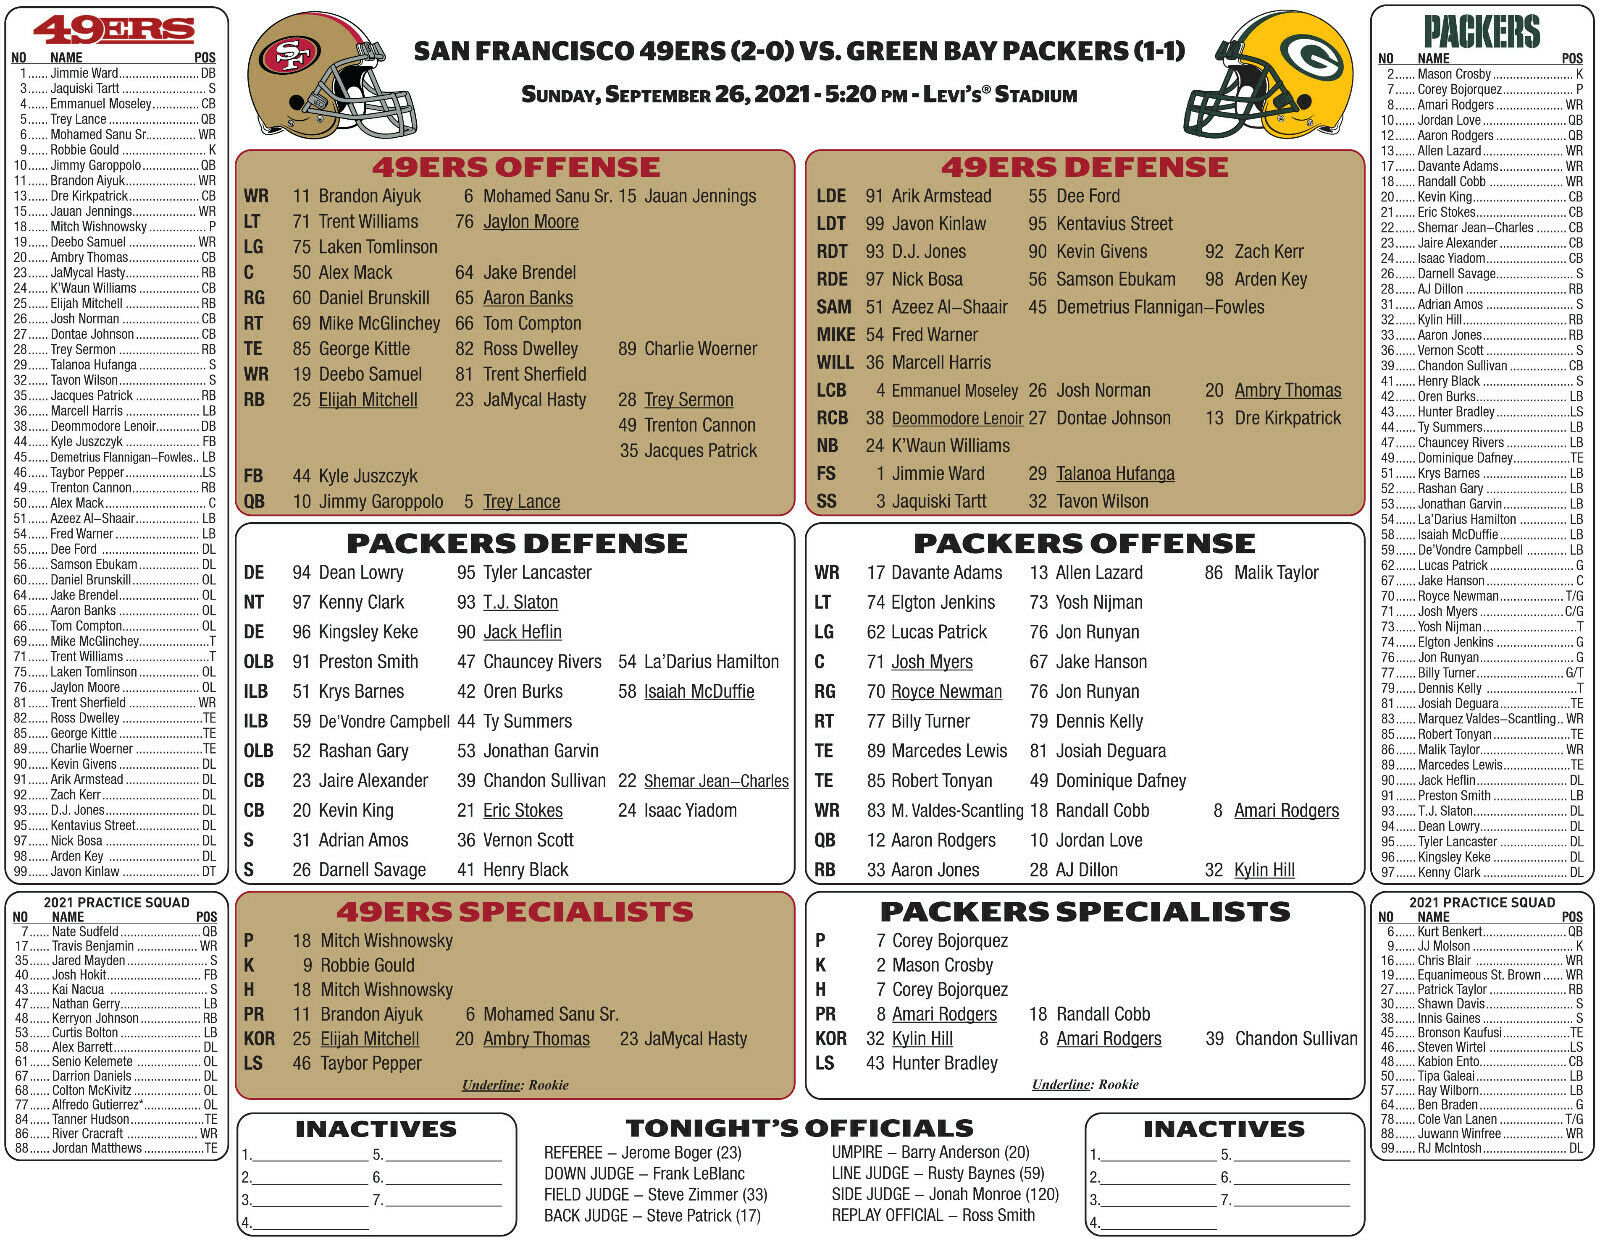 Green Bay Packers At San Francisco 49ers Roster Flip Card -sep 26, 2021